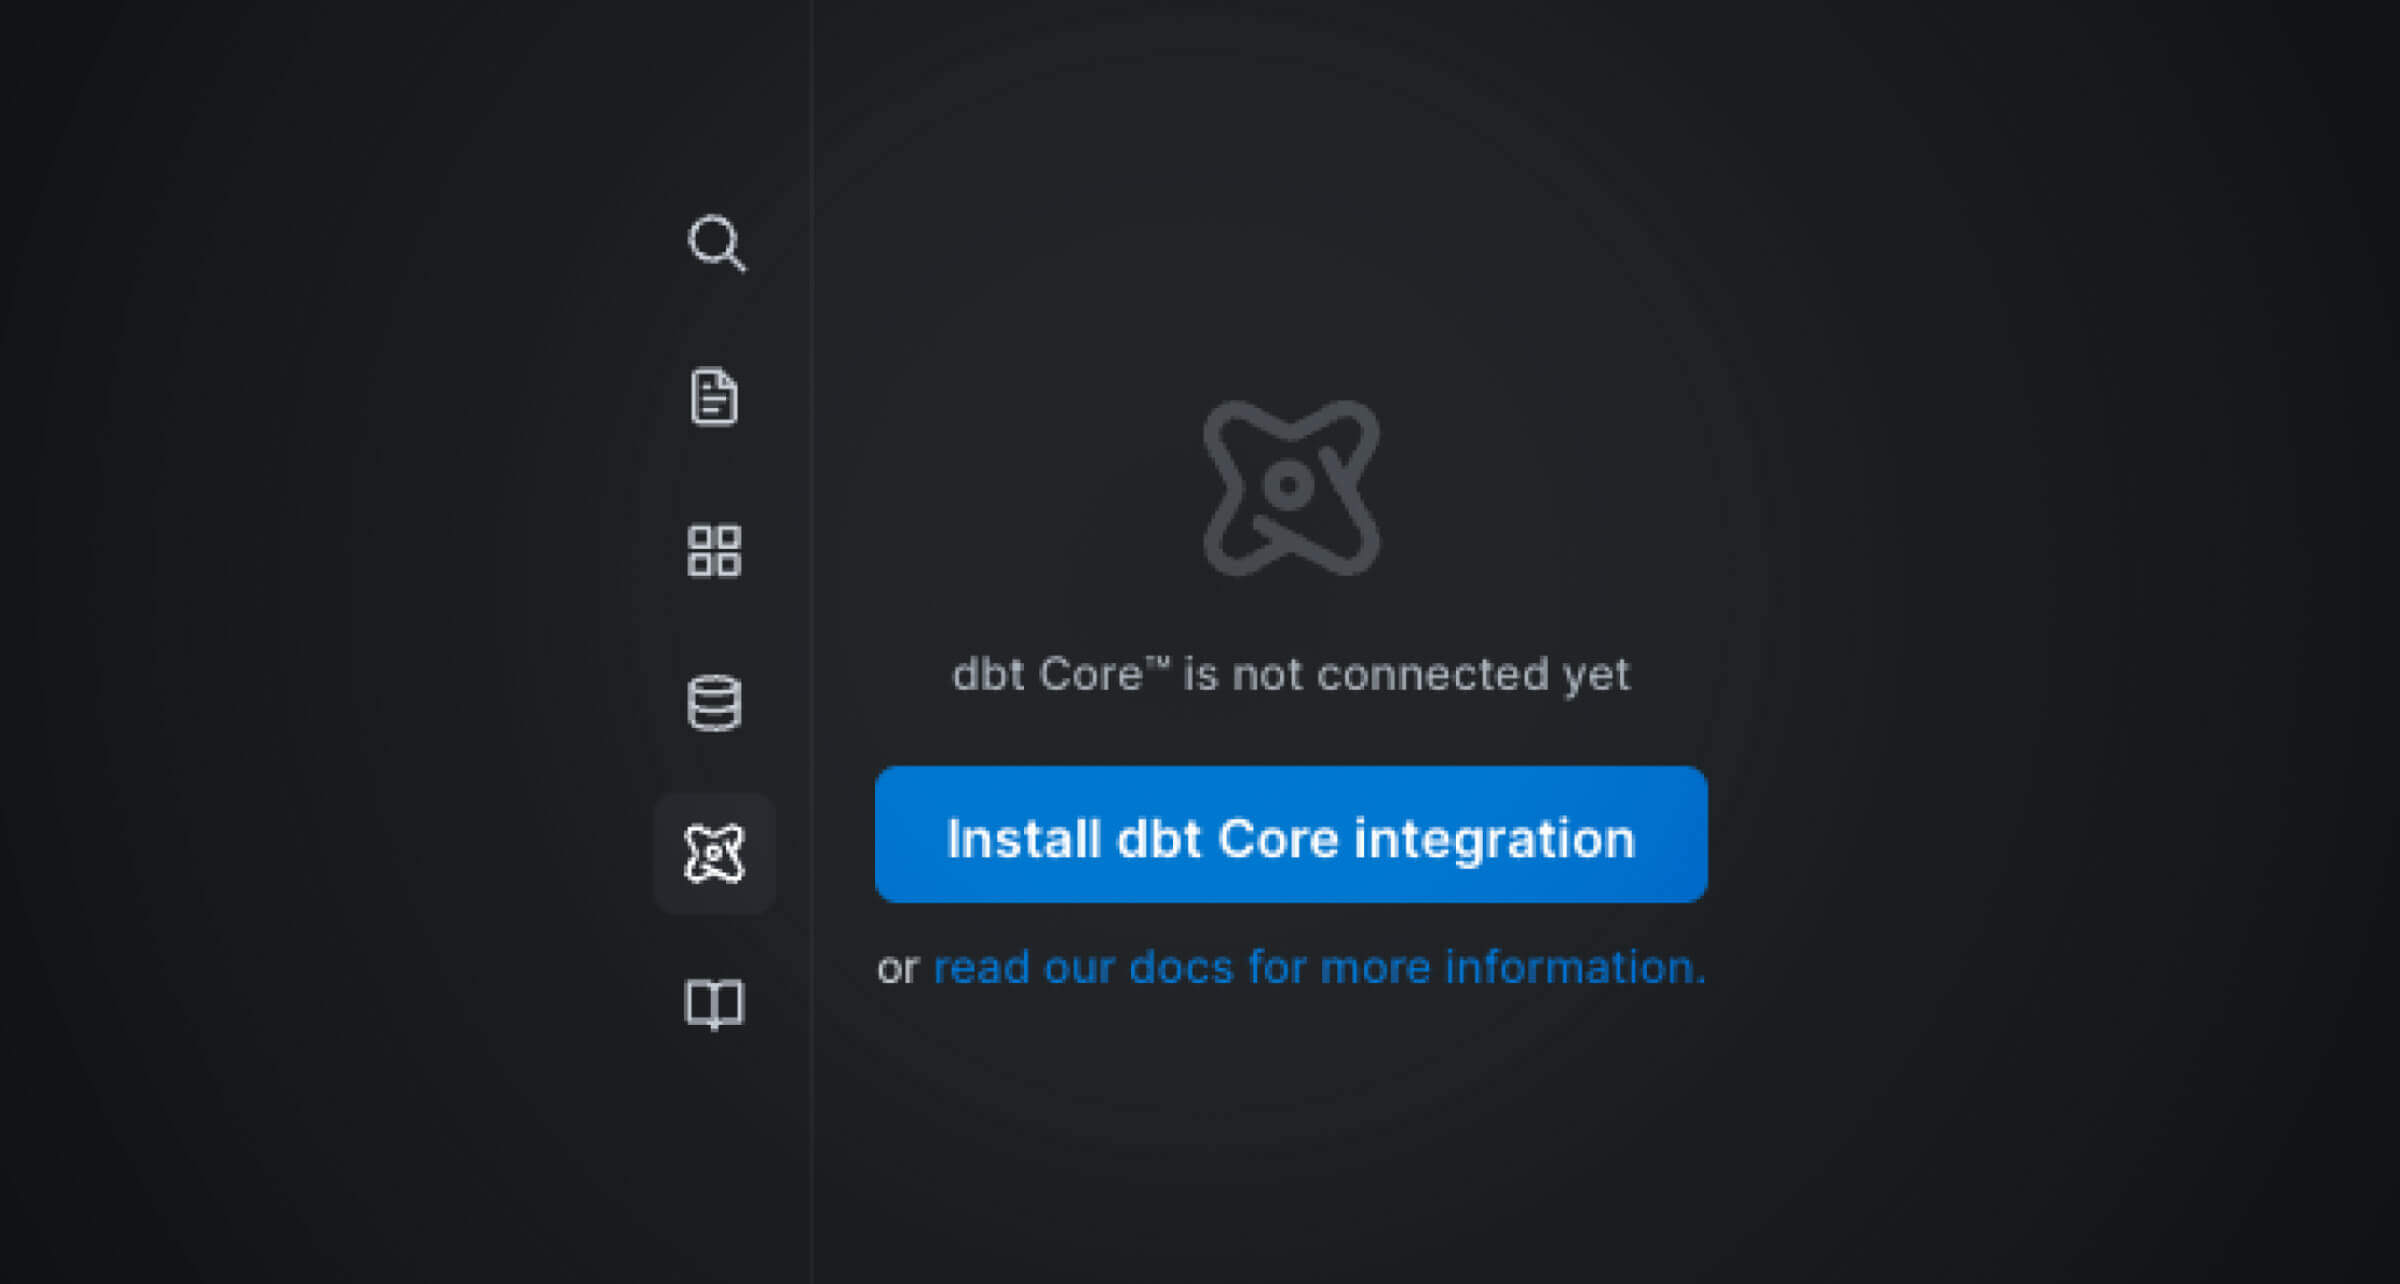 Installing dbt Core integration on PopSQL